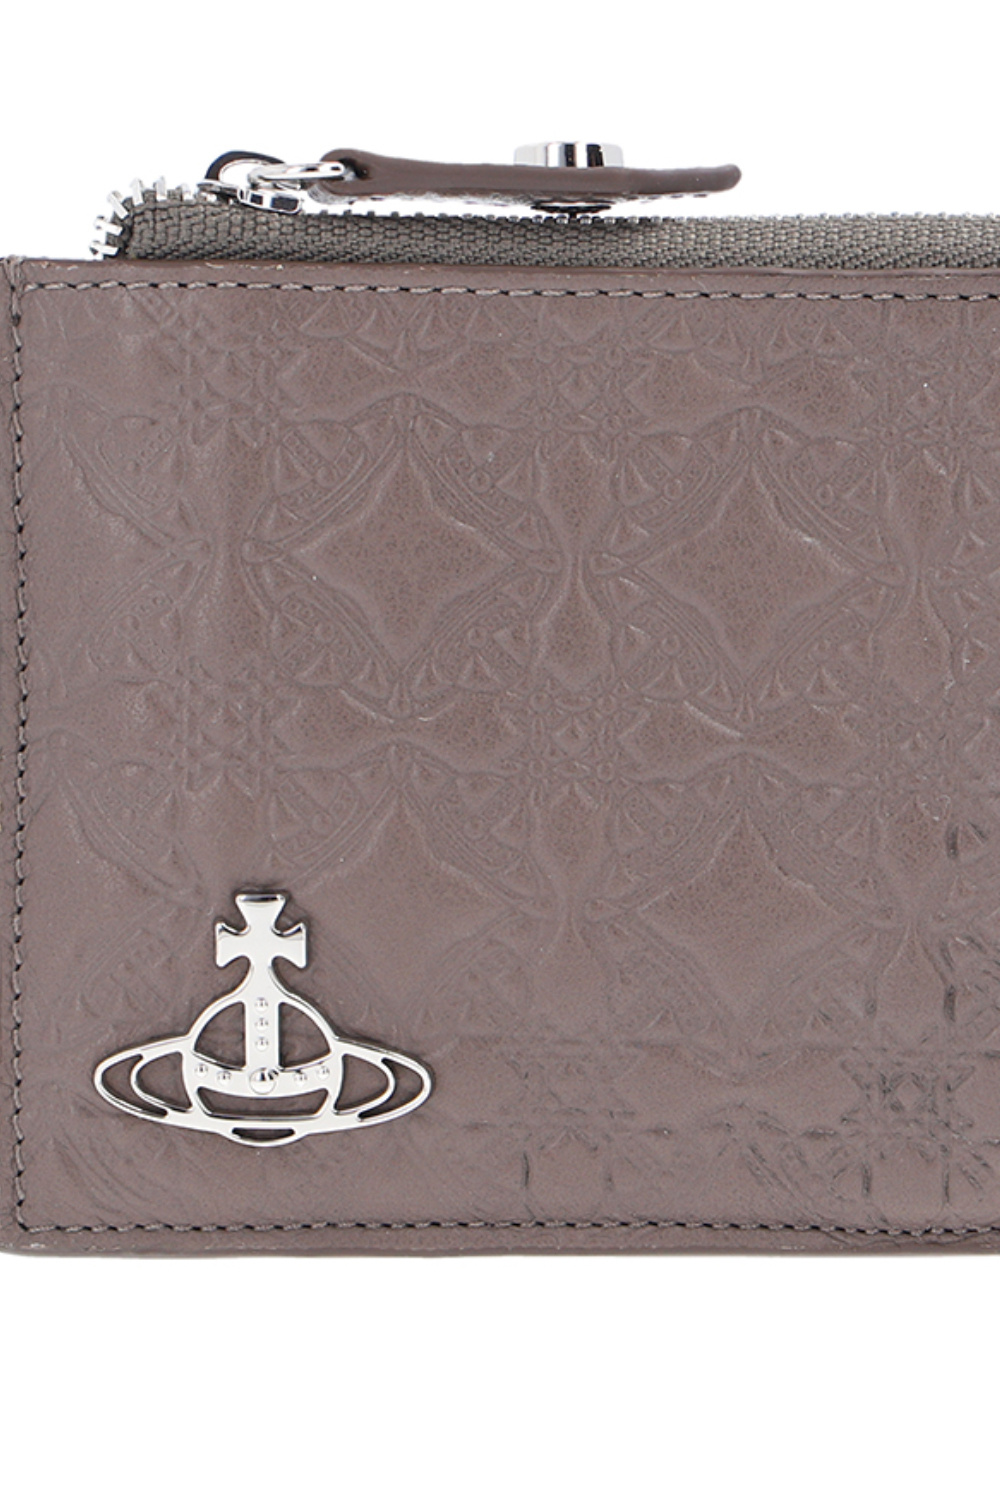 Vivienne Westwood ‘Geroge’ leather card holder with logo